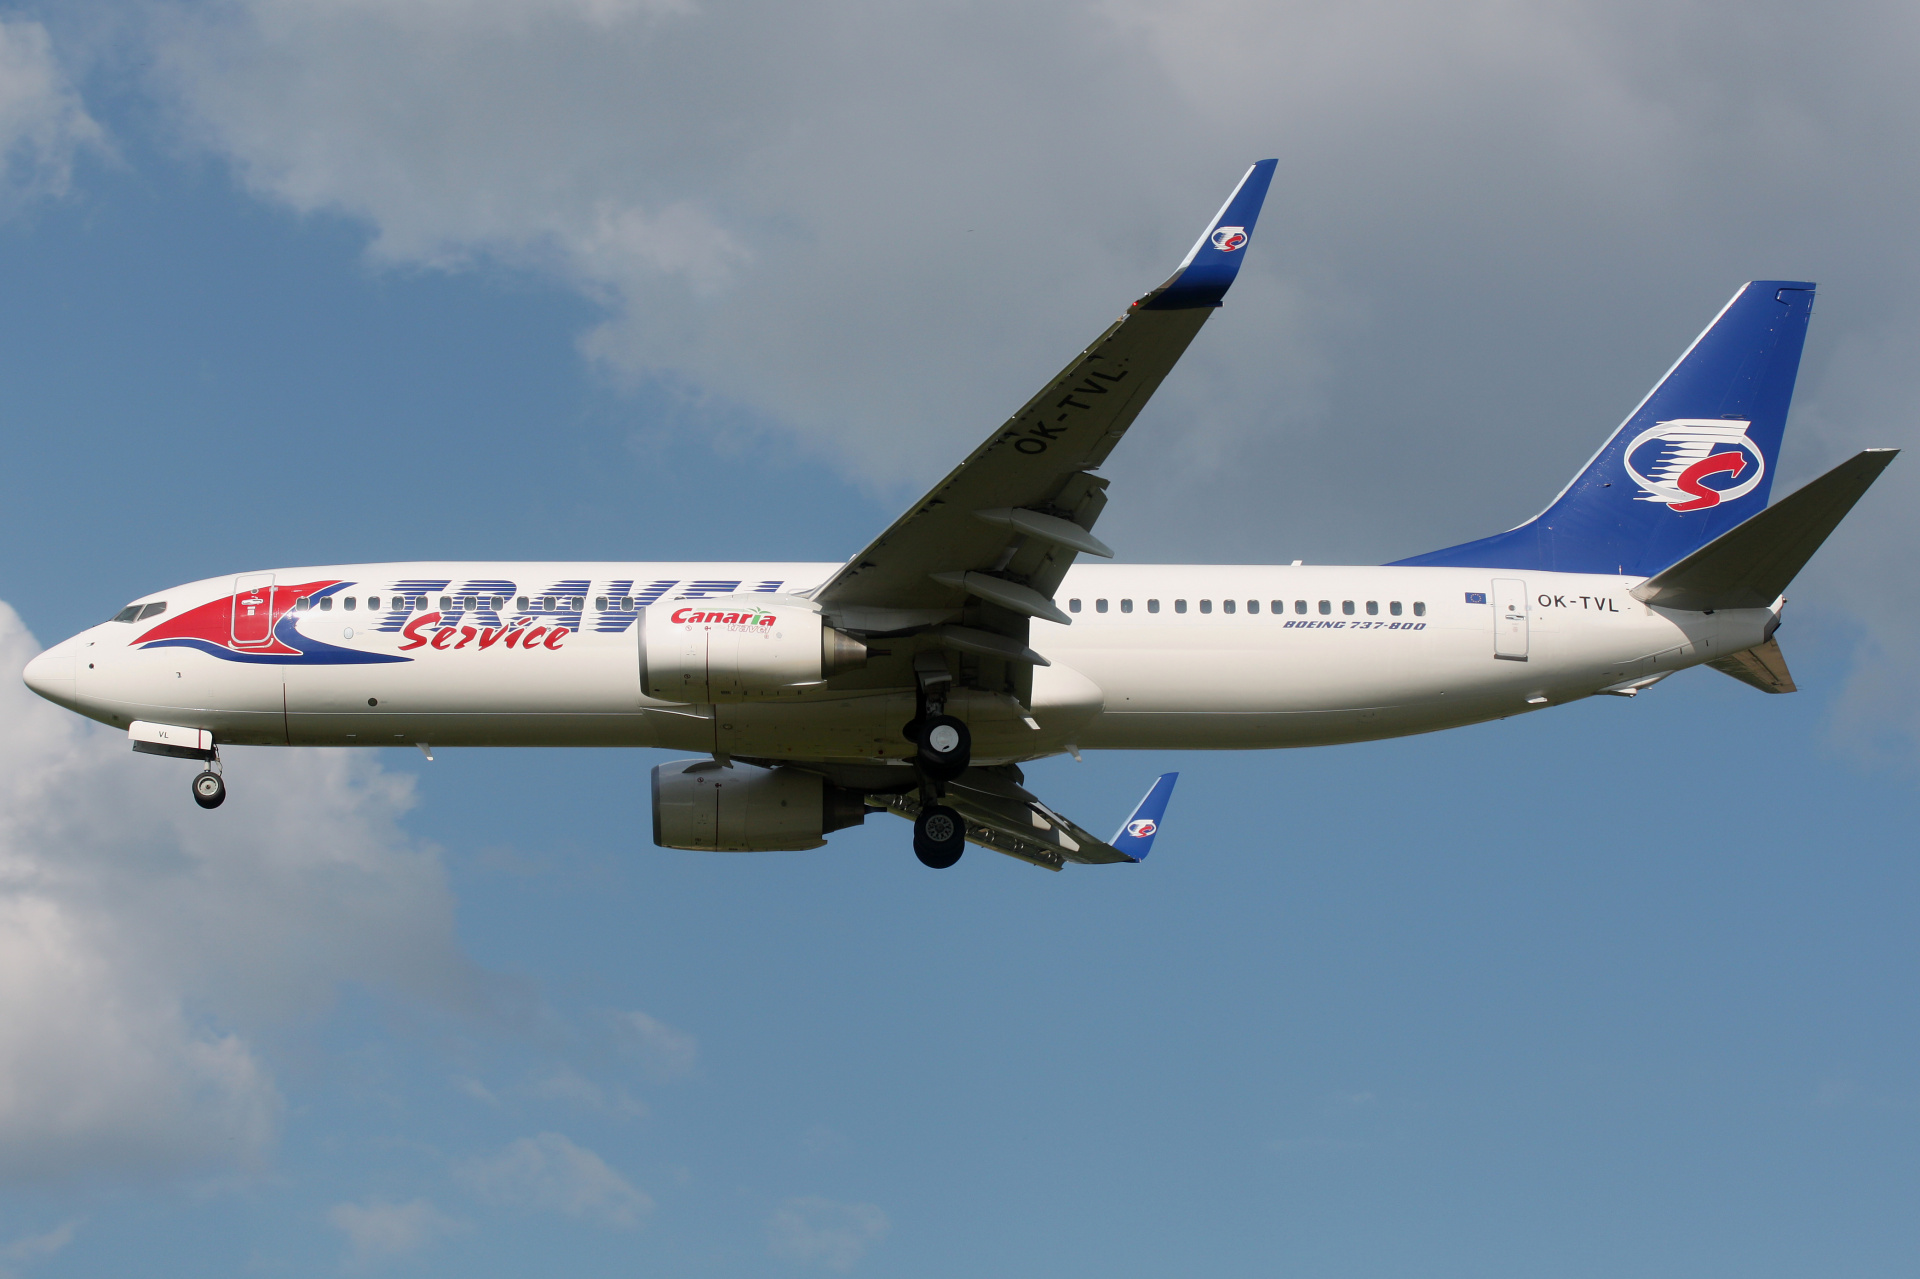 OK-TVL (Aircraft » EPWA Spotting » Boeing 737-800 » Travel Service Airlines)